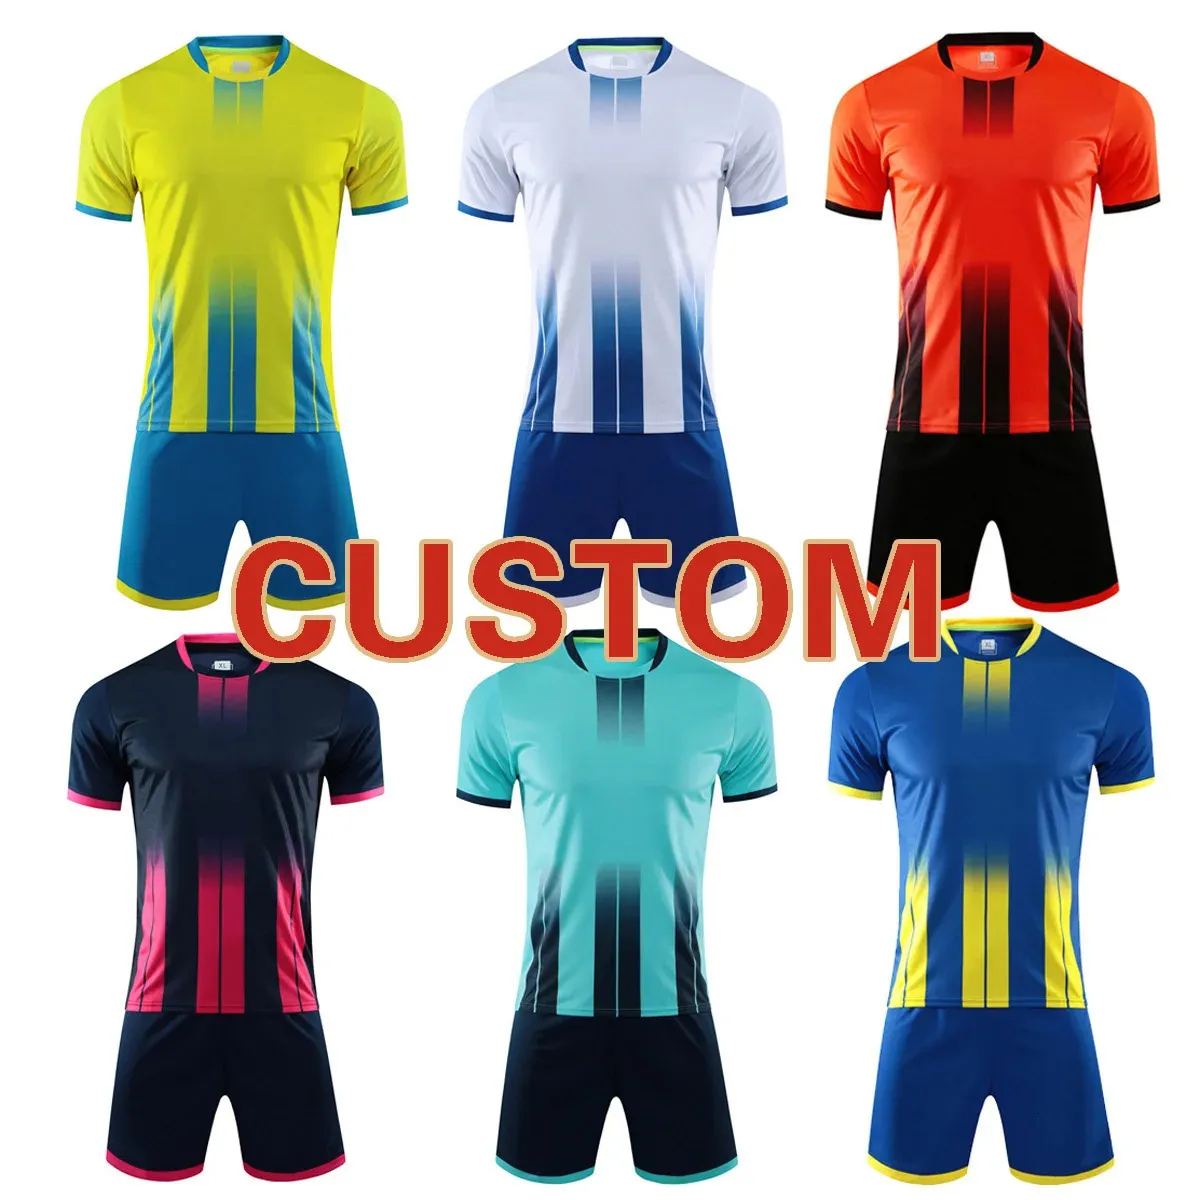 Personalizado simples secagem rápida equipe treinamento wear masculino esportes futebol retro camisa de futebol uniformes conjuntos kits conjunto completo 240122